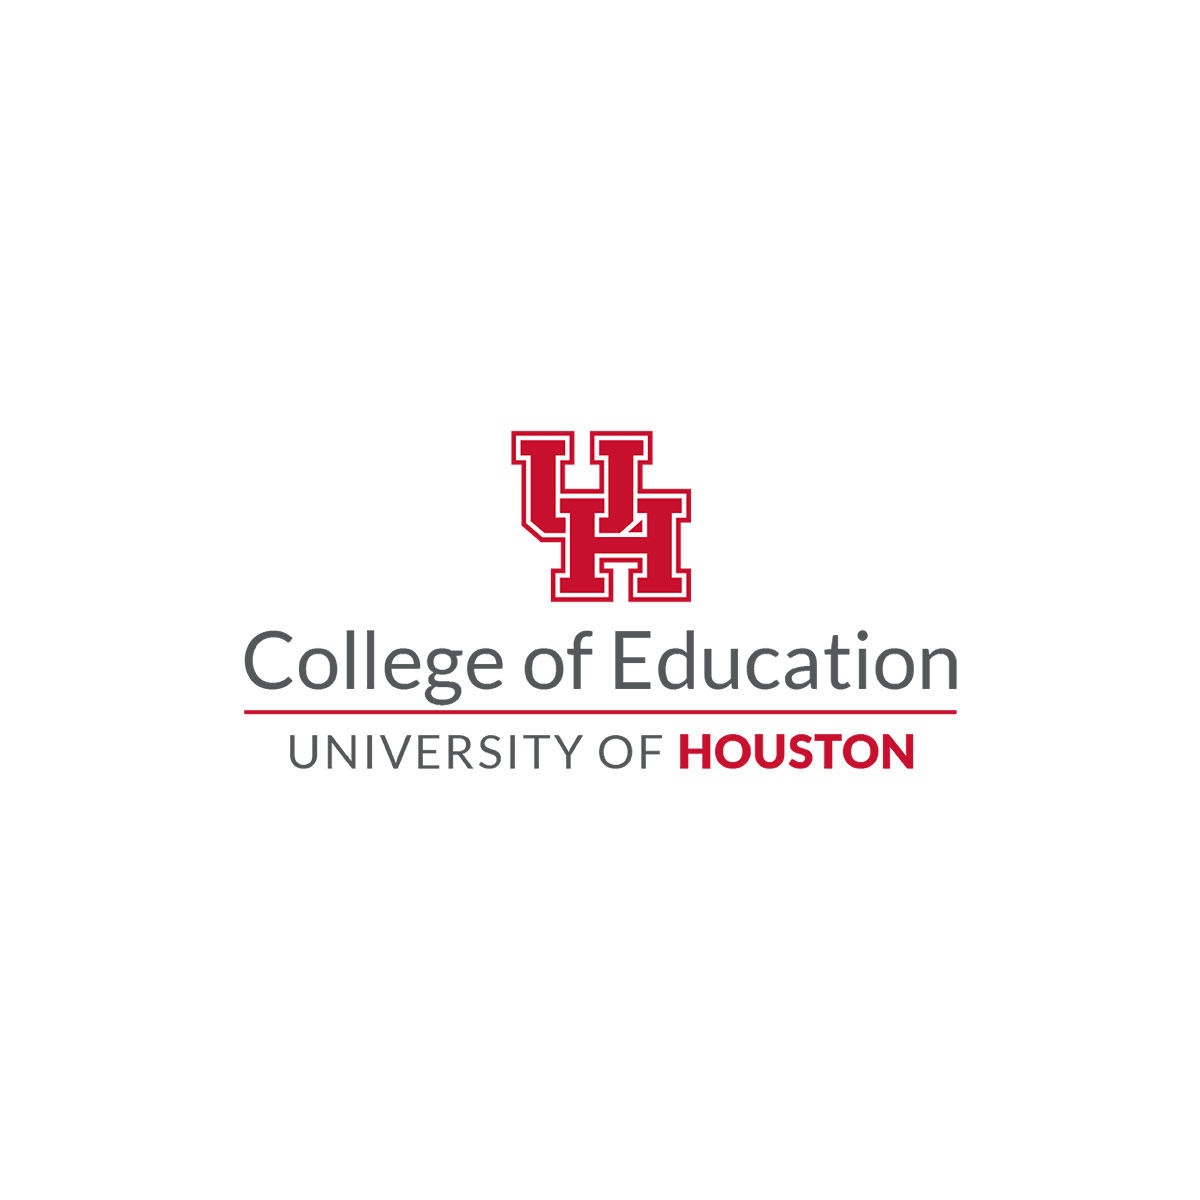 College of Education - University of Houston square logo